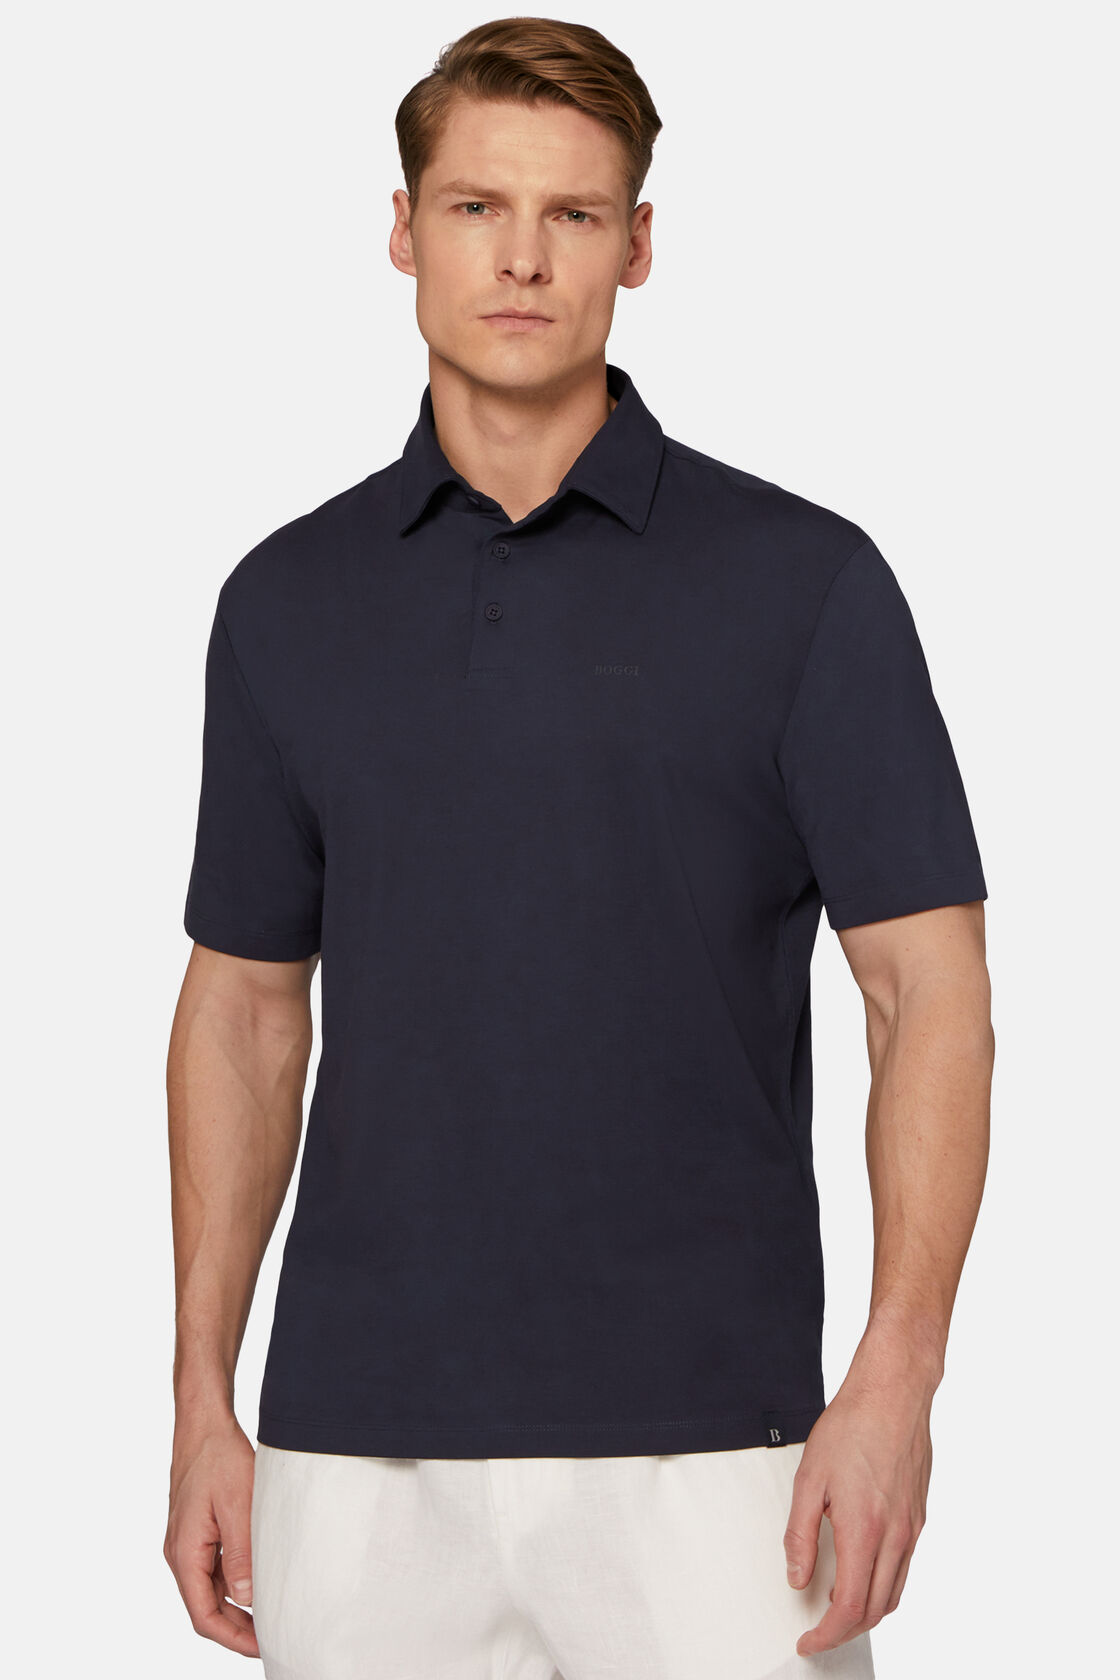 Poloshirt in stretch supima katoen, Navy blue, hi-res